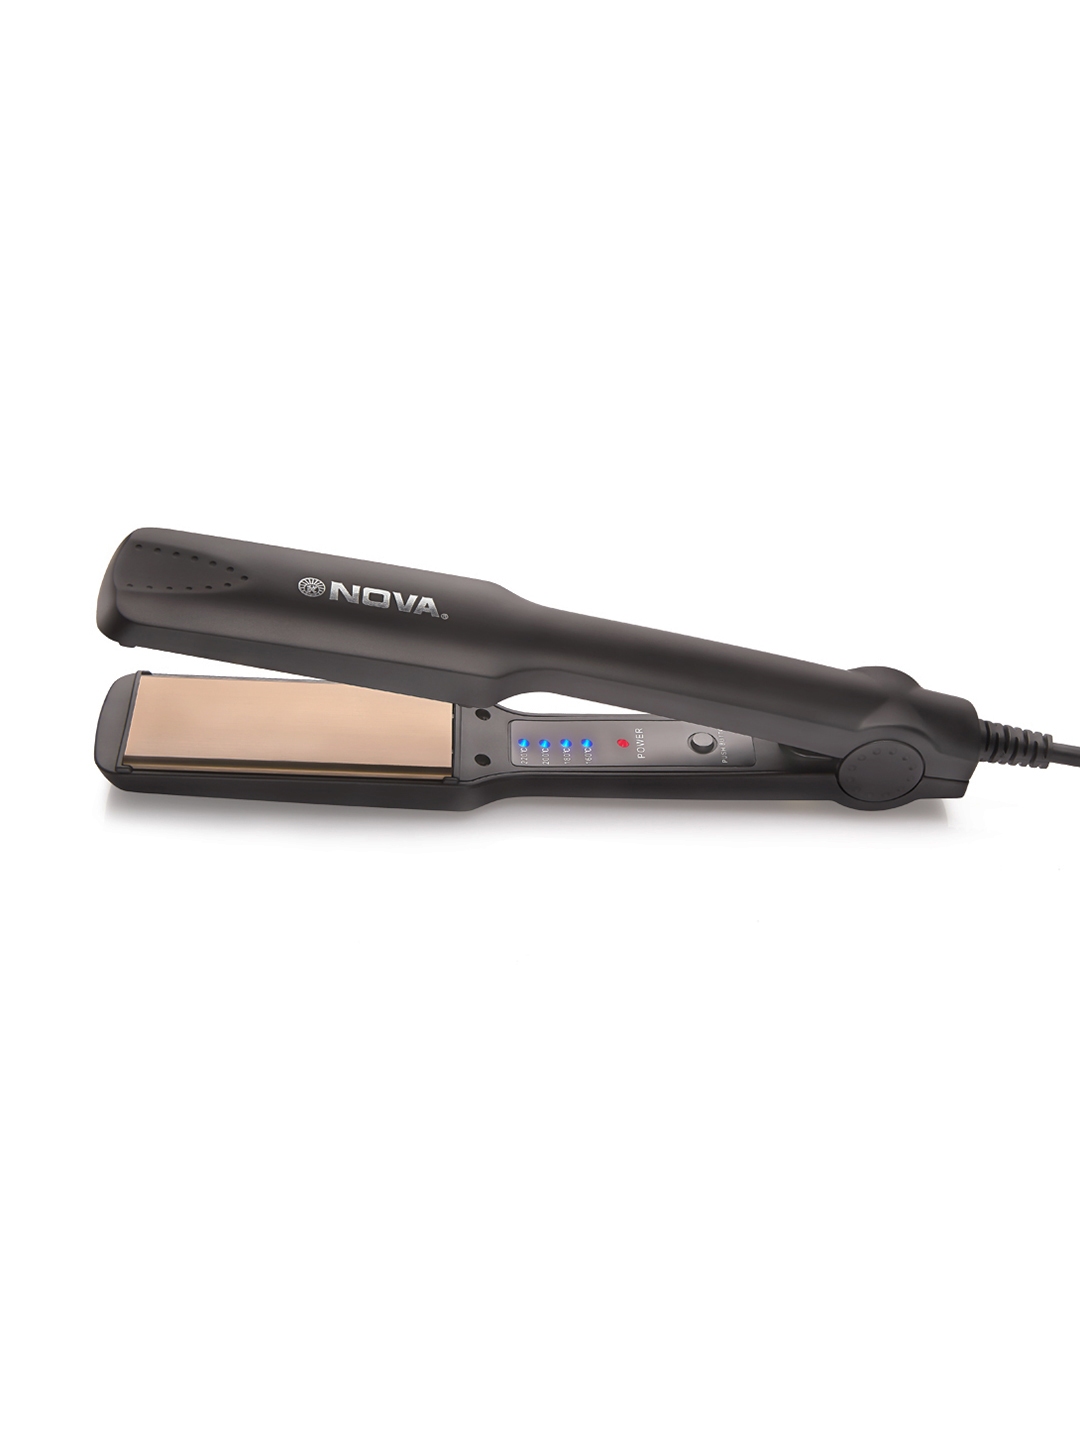 Buy Nova NHS900 Temperature Control Professional Hair Straightener Online  at Best Price of Rs 2495  bigbasket